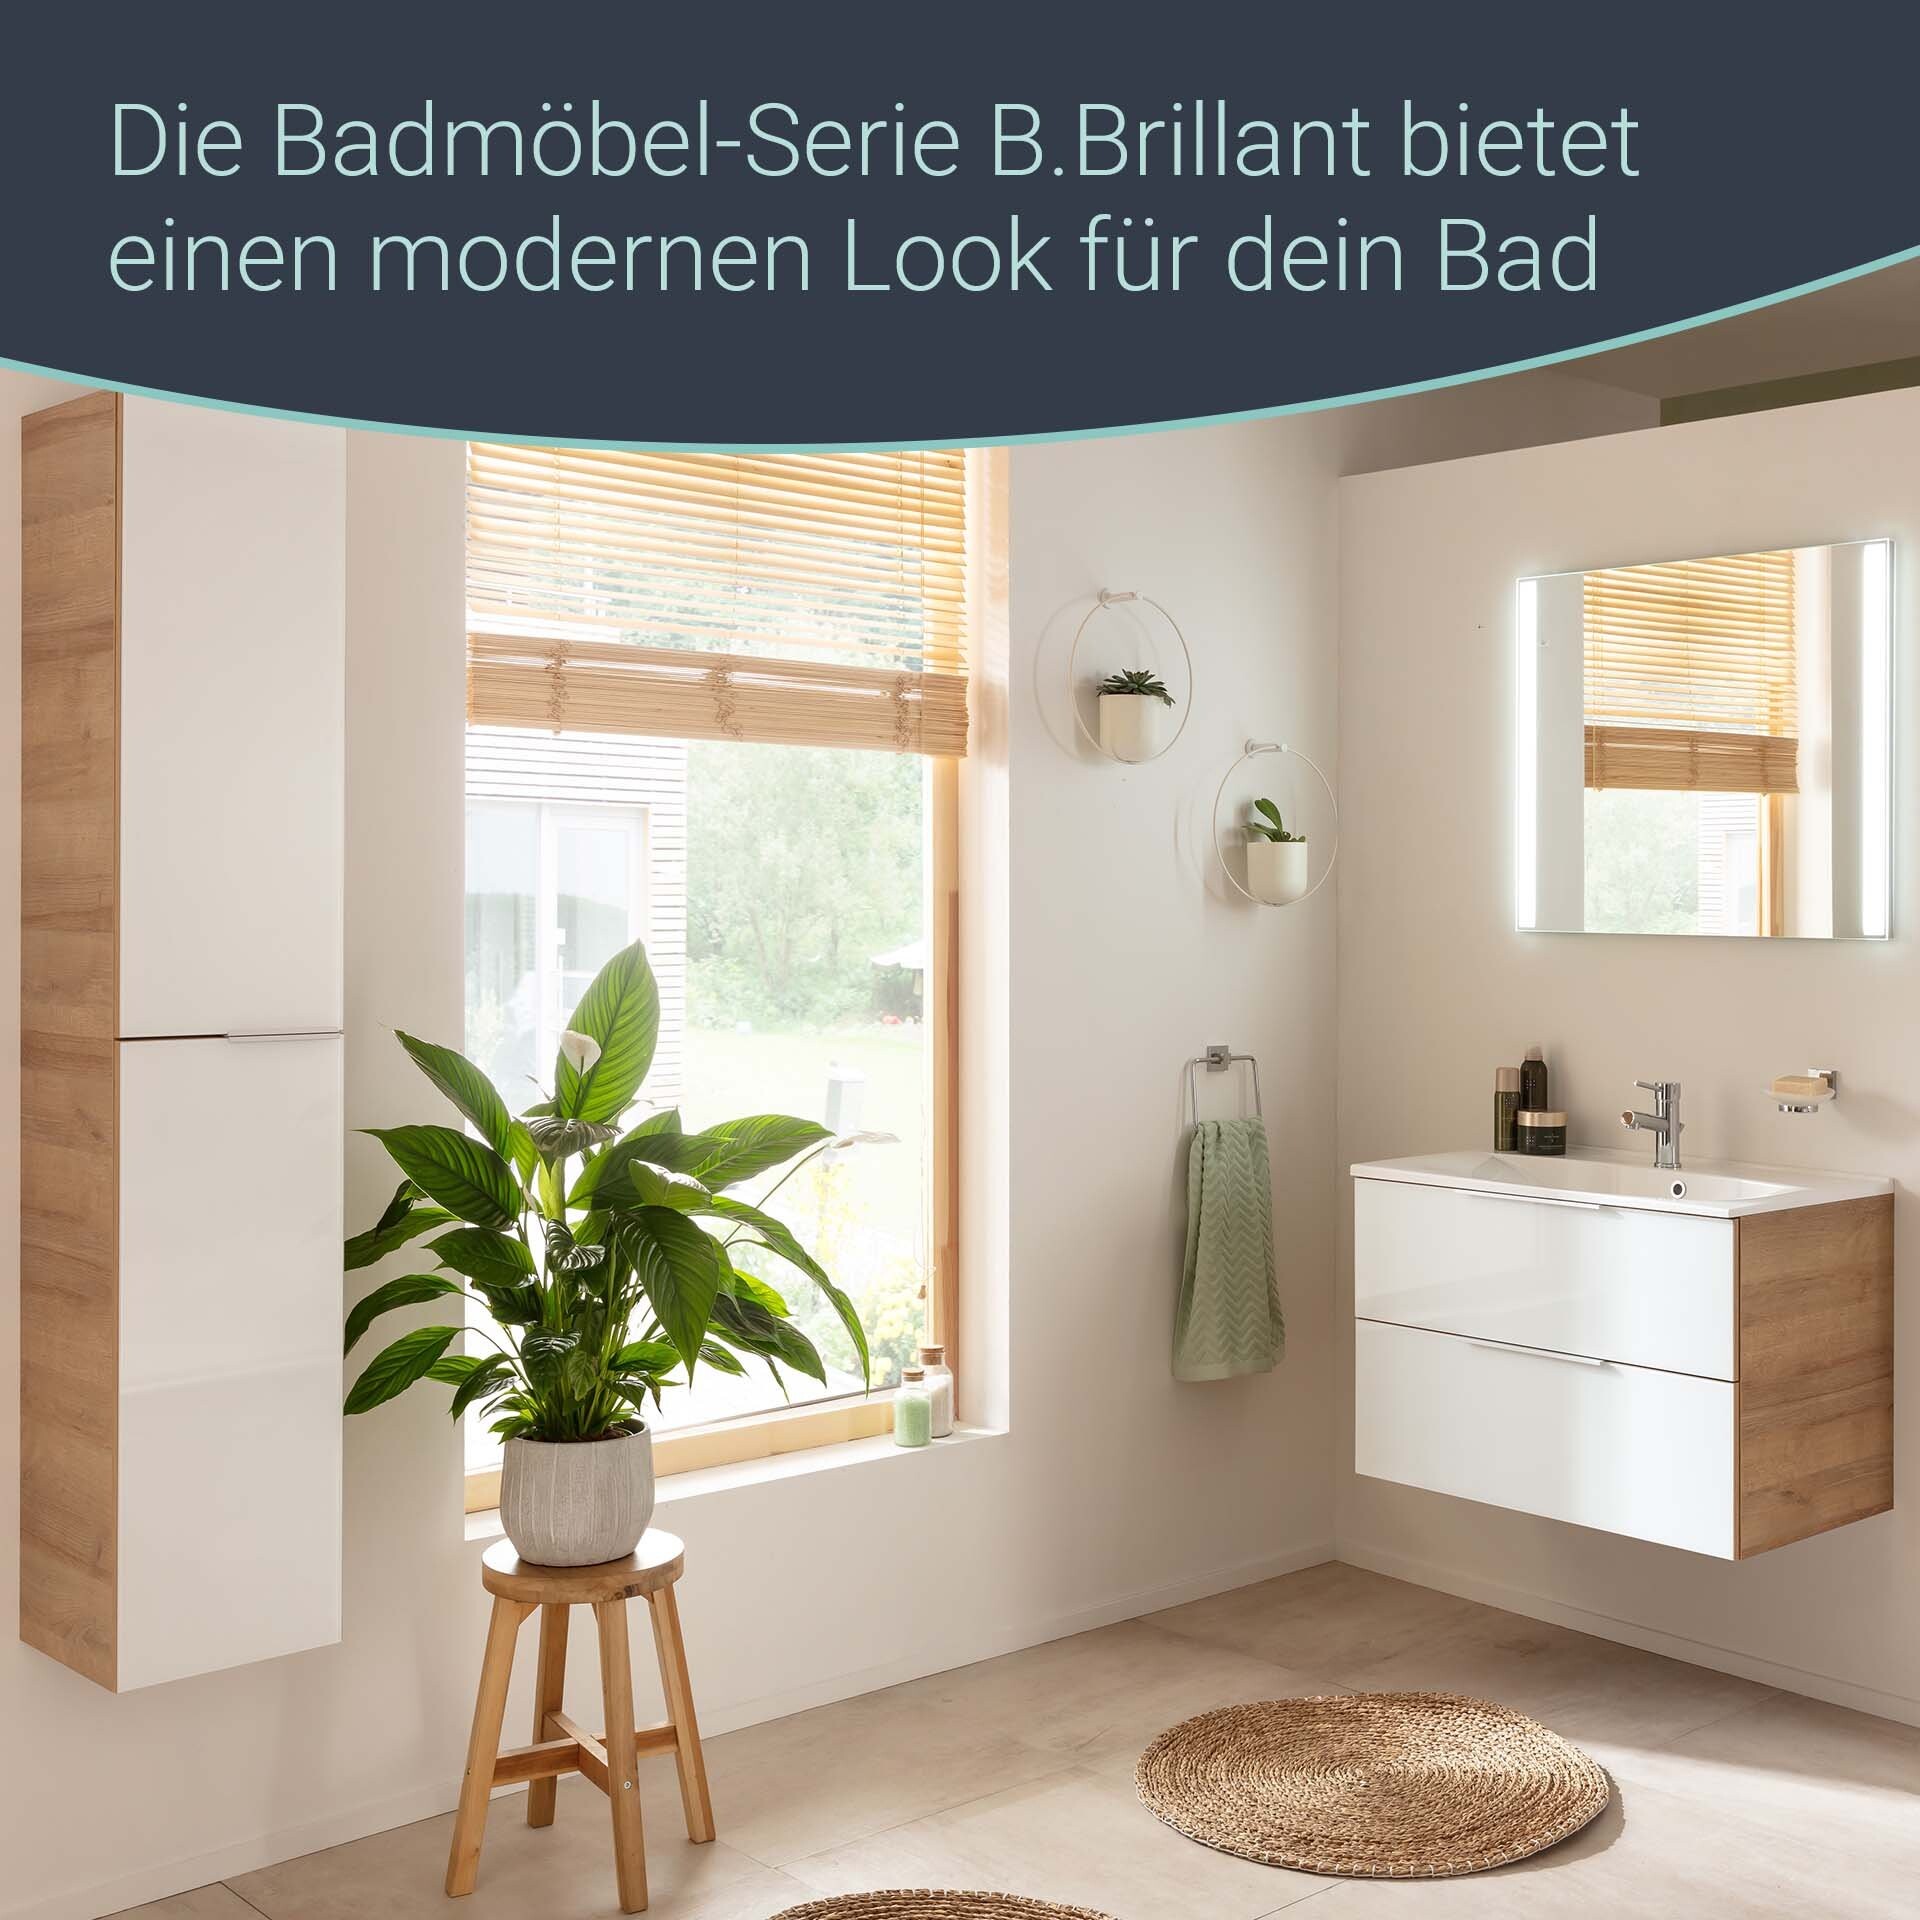 Fackelmann B.BRILLANT Badmöbel Set 2-teilig, 80 cm breit, Weiß Glas/Braun hell, Gussmarmor